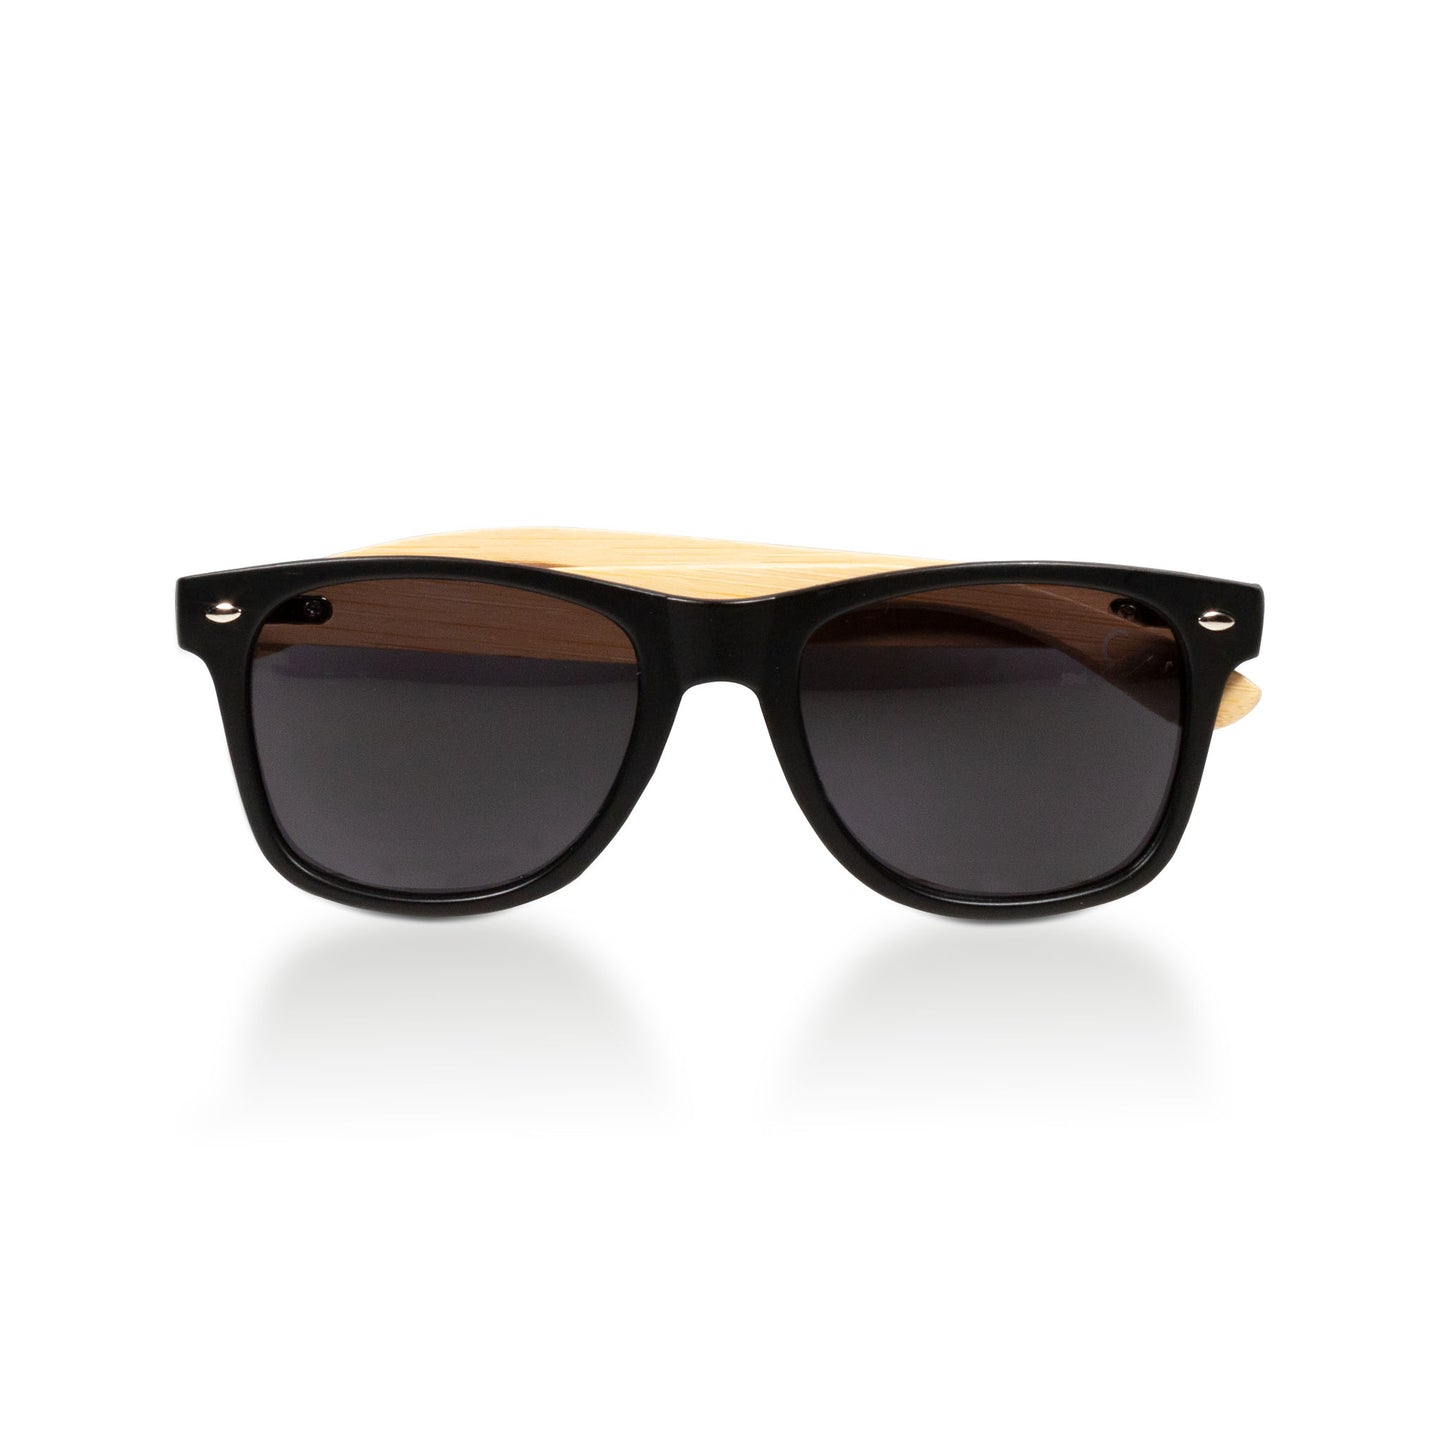 MagGlasses "bamboo" Sonnenbrillen